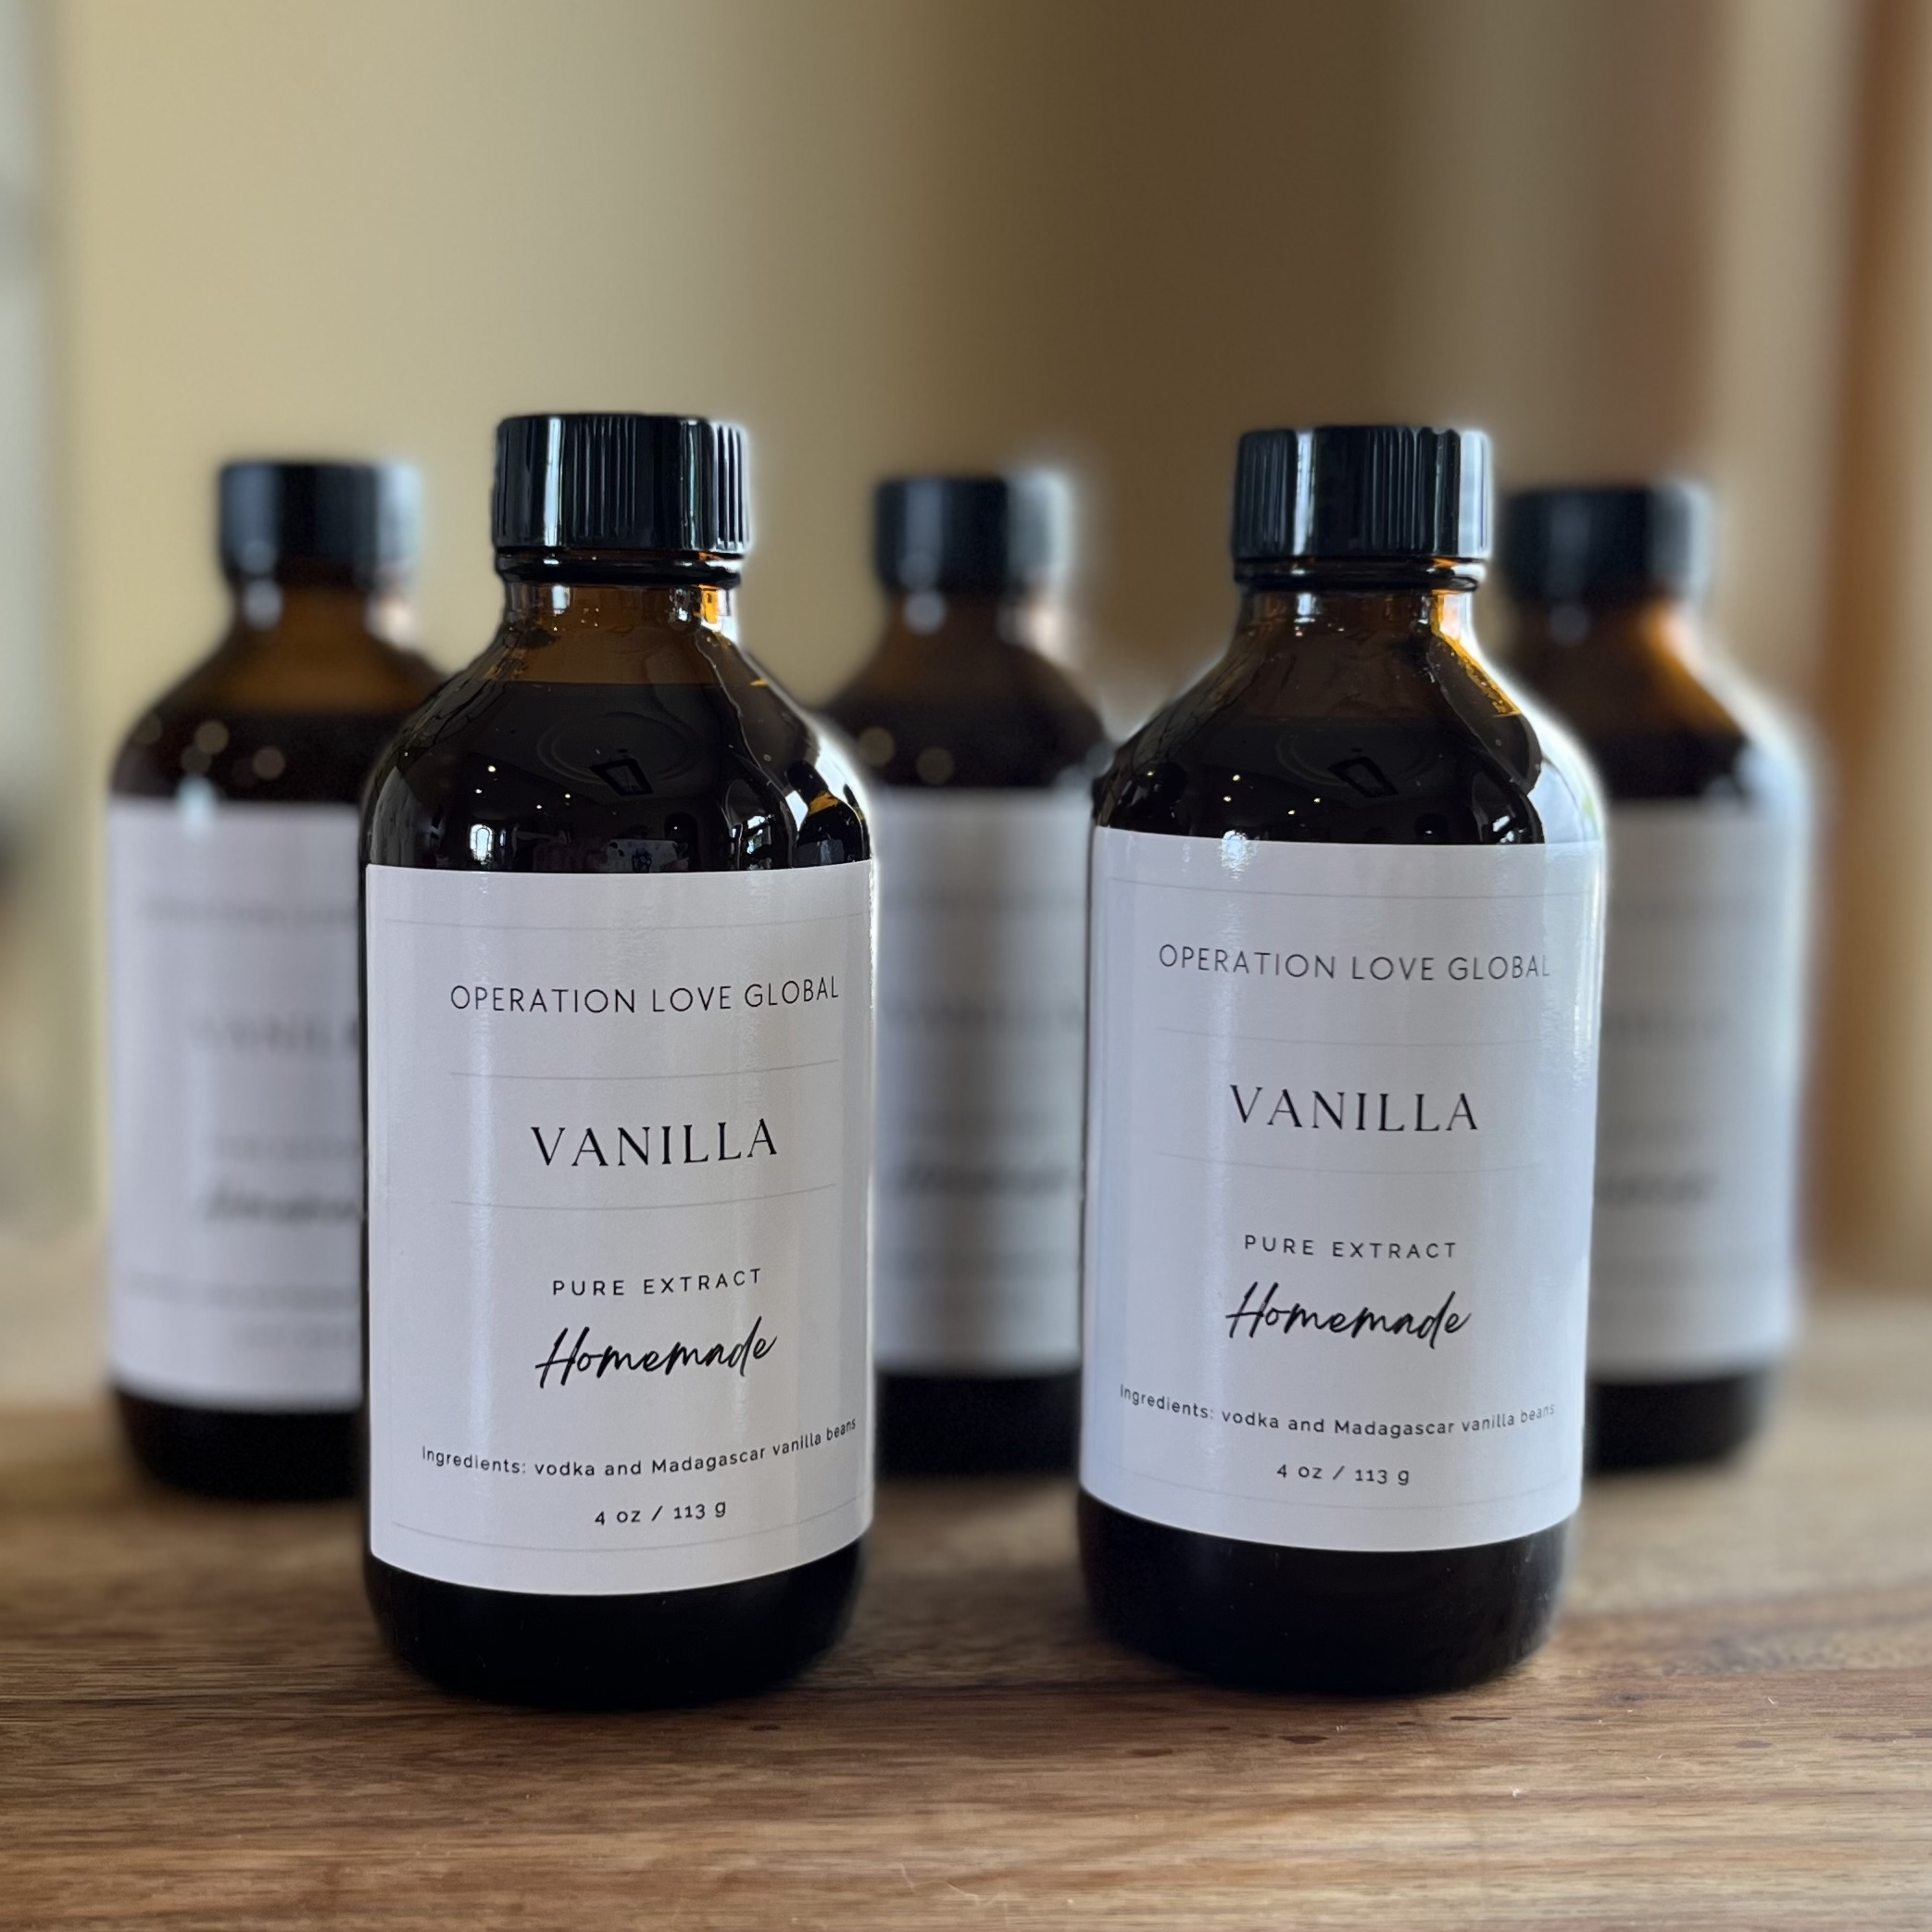 4 oz bottles of homemade vanilla